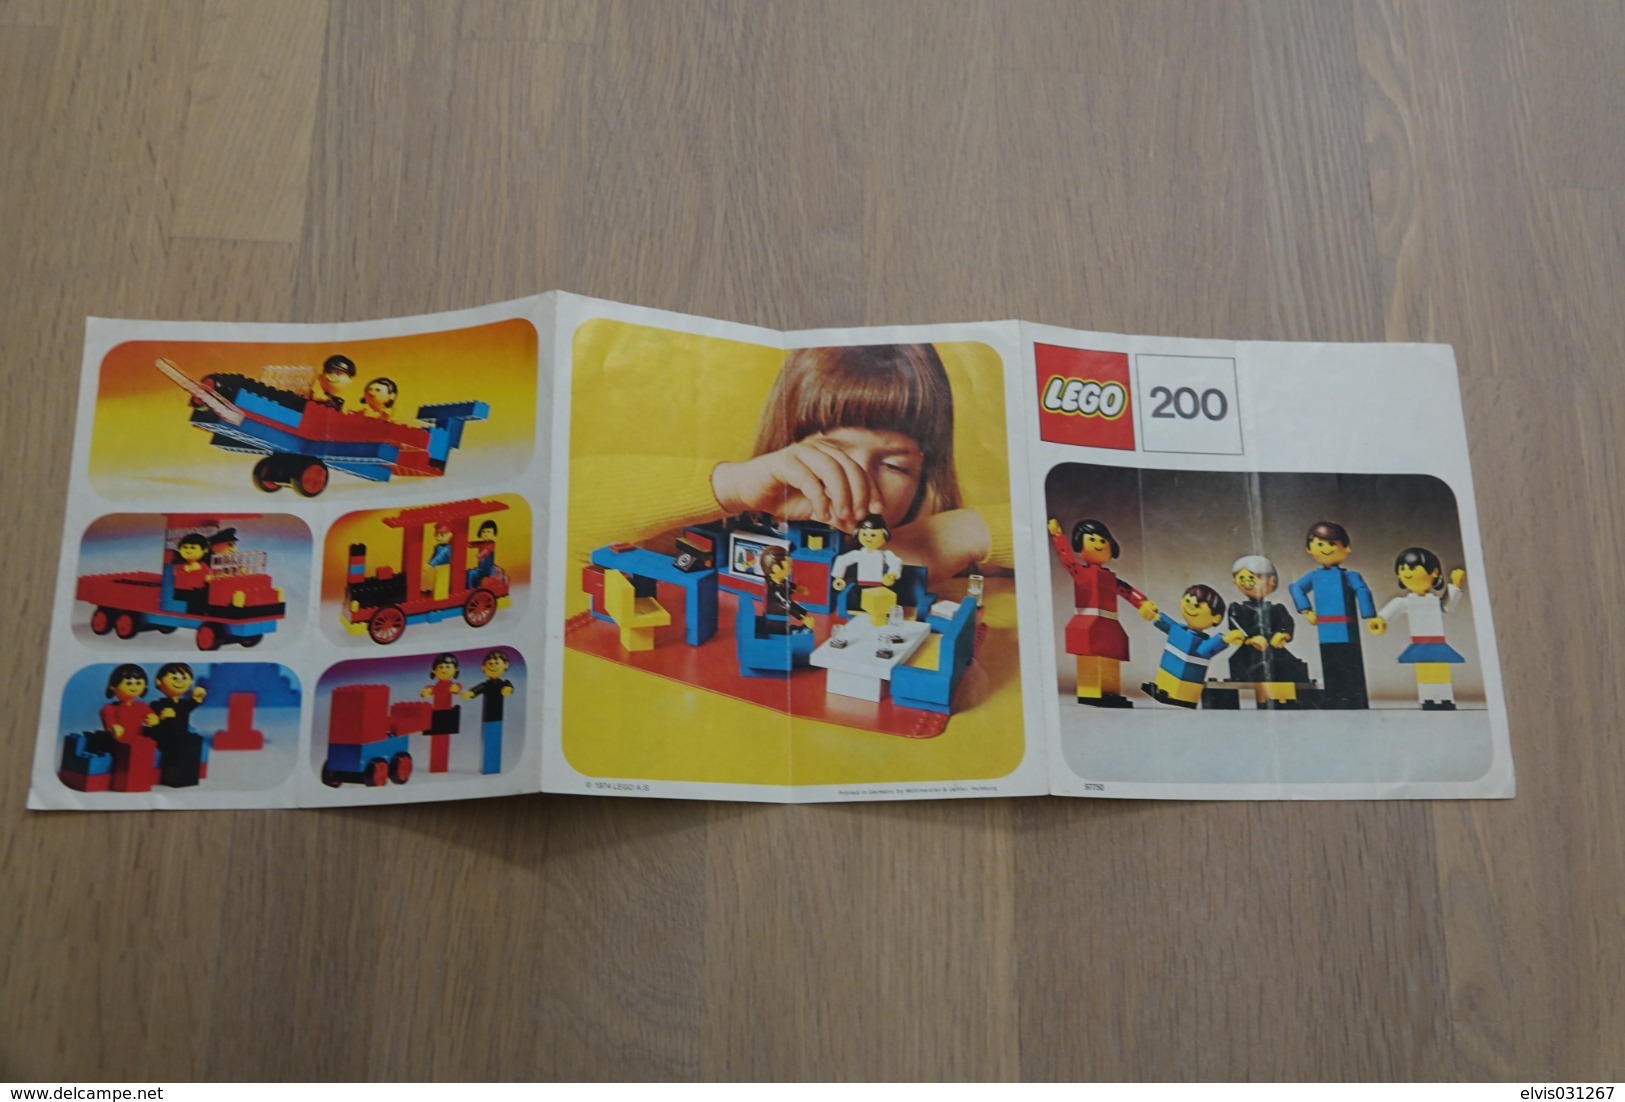 LEGO - 200 INSTRUCTION MANUAL - Original Lego 1974 - Vintage - Catalogues